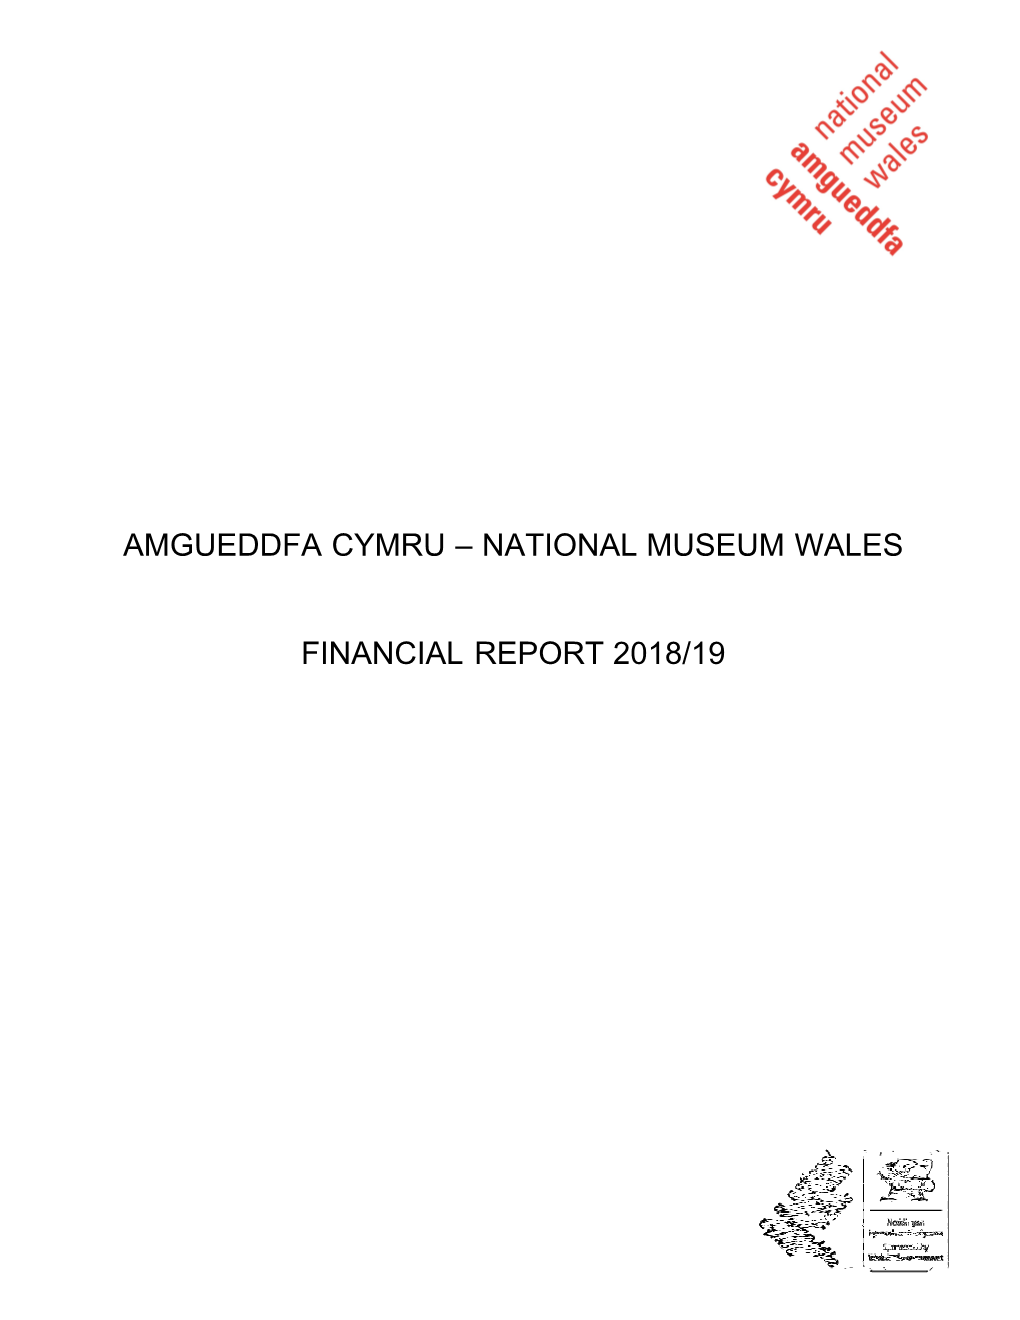 Amgueddfa Cymru – National Museum Wales Financial Report 2018/19